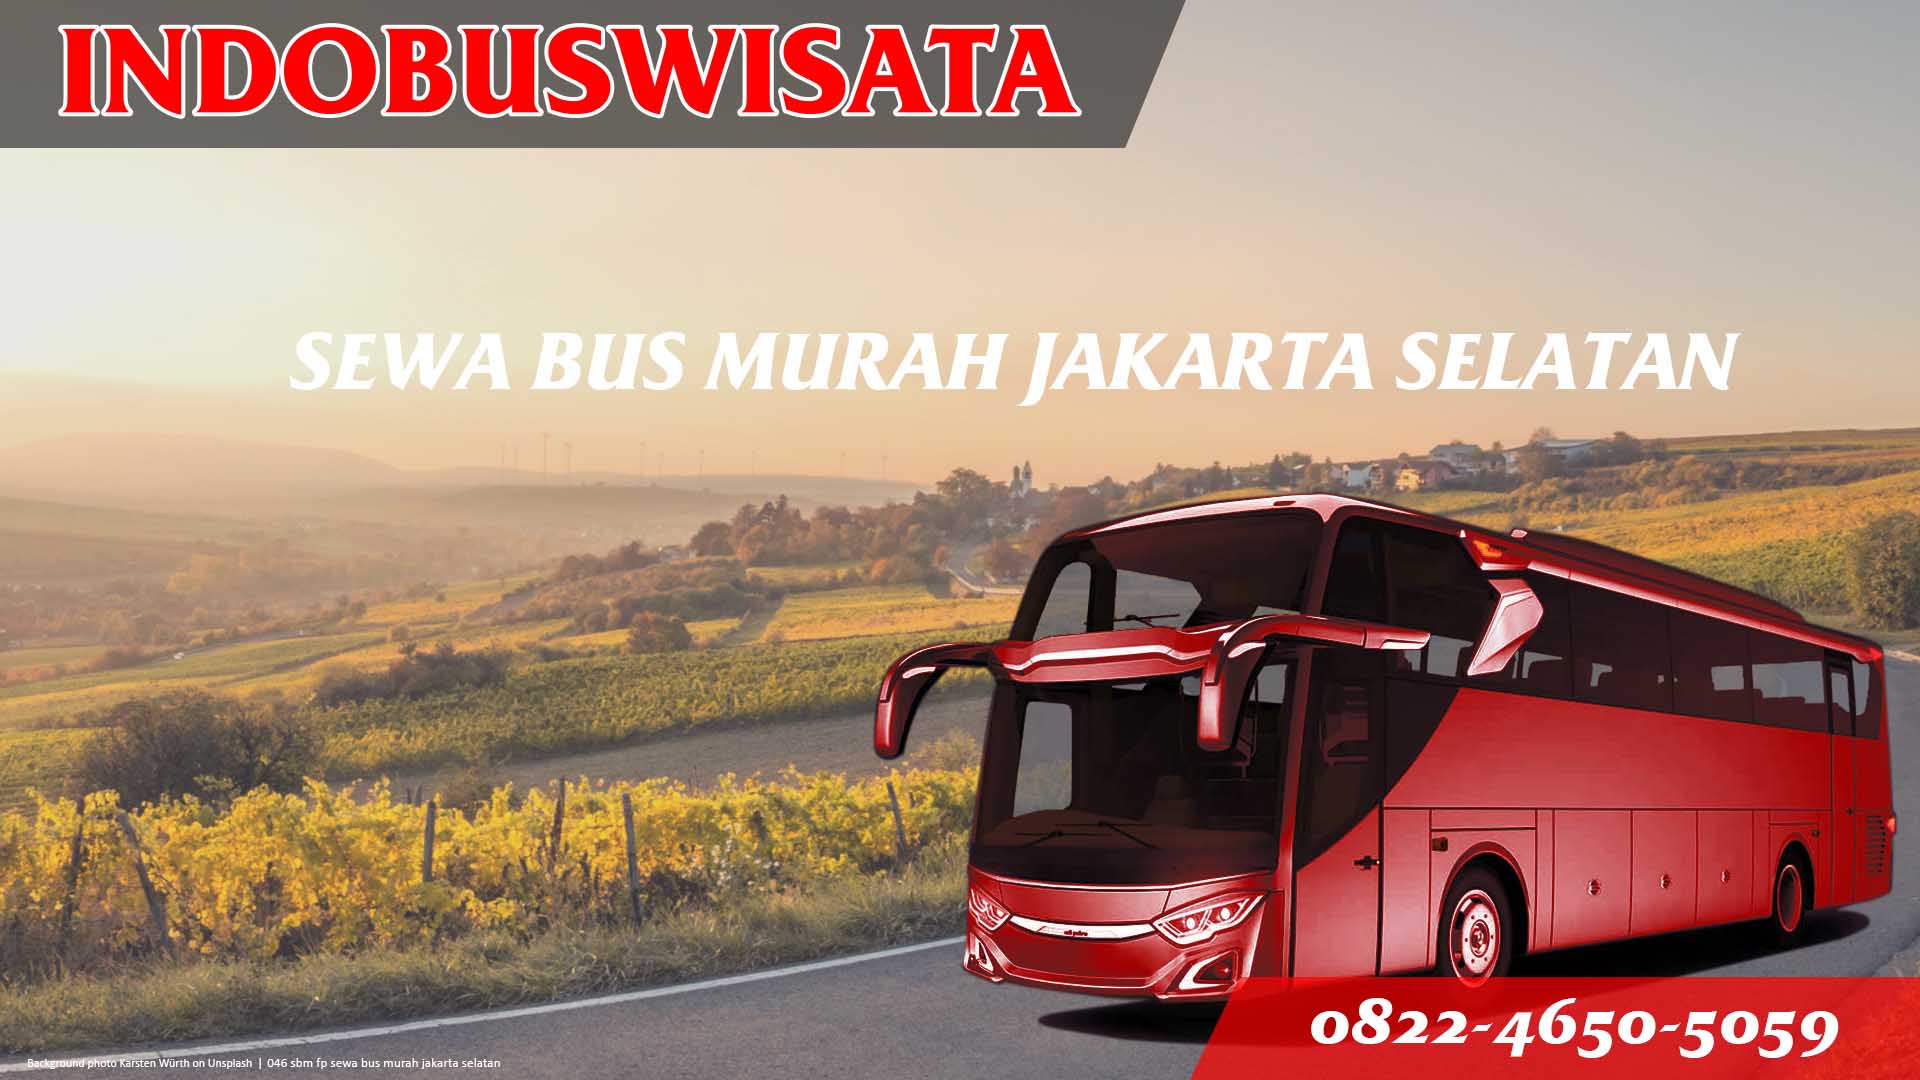 046 Sbm Fp Sewa Bus Murah Jakarta Selatan Jb 3 Hdd Indobuswisata